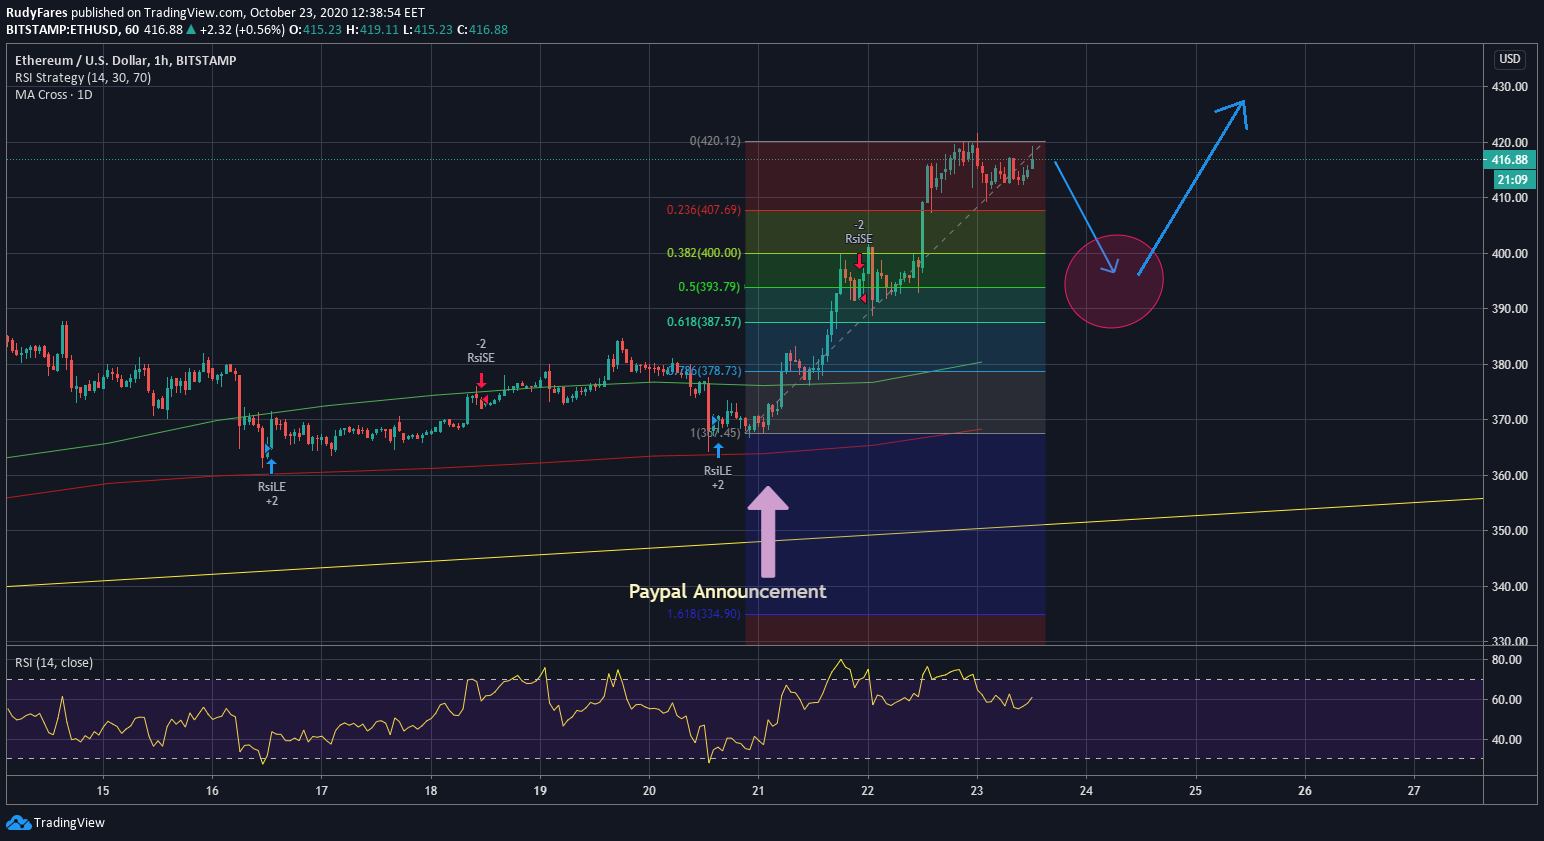 ETH/USD price 1H chart, scenario 1